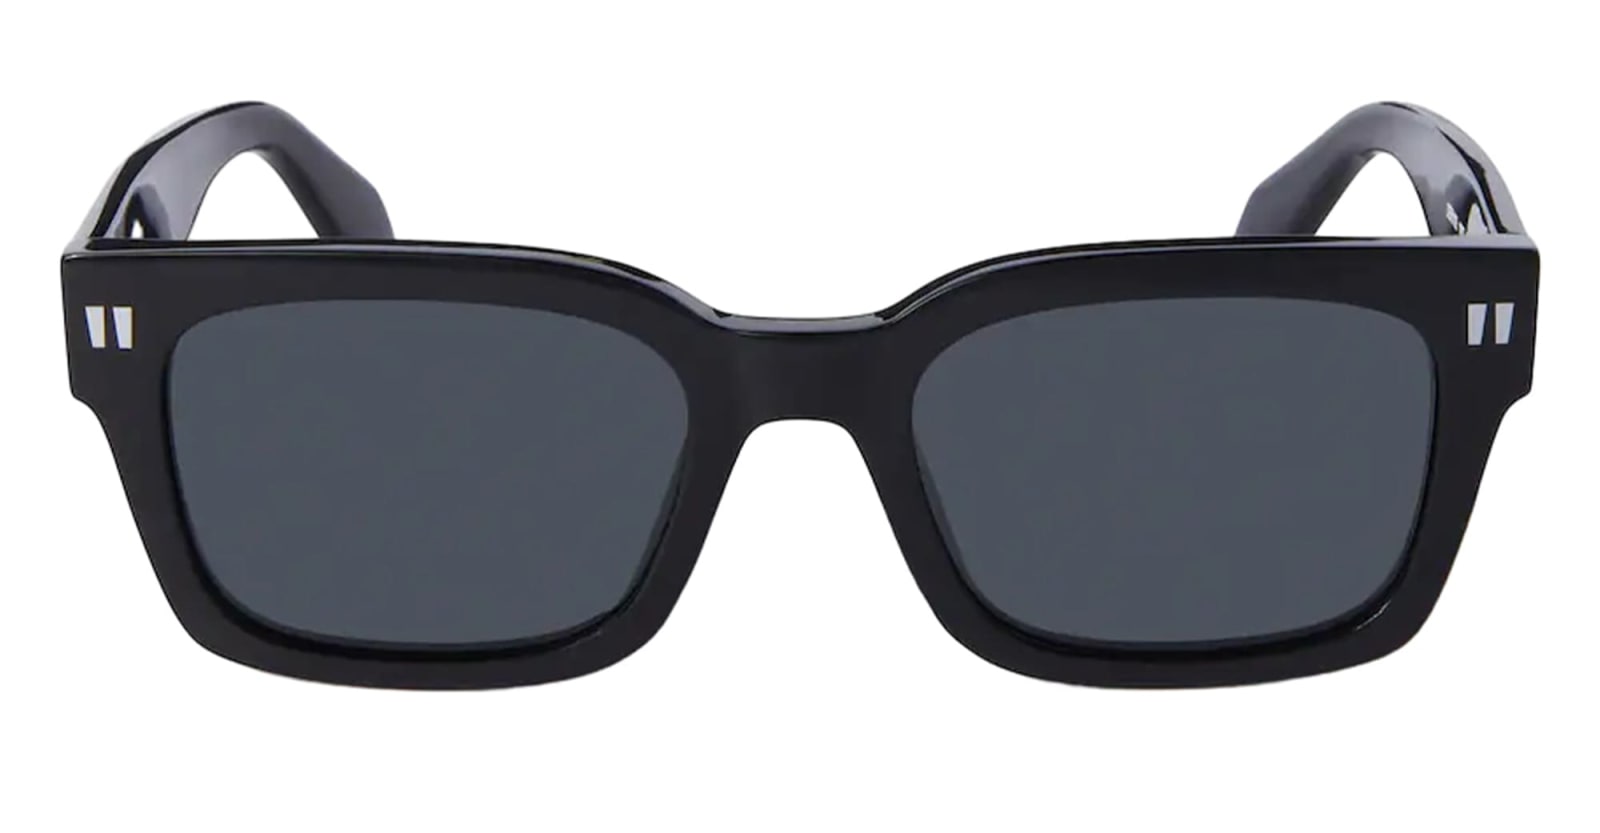 Midland - Black / Dark Grey Sunglasses